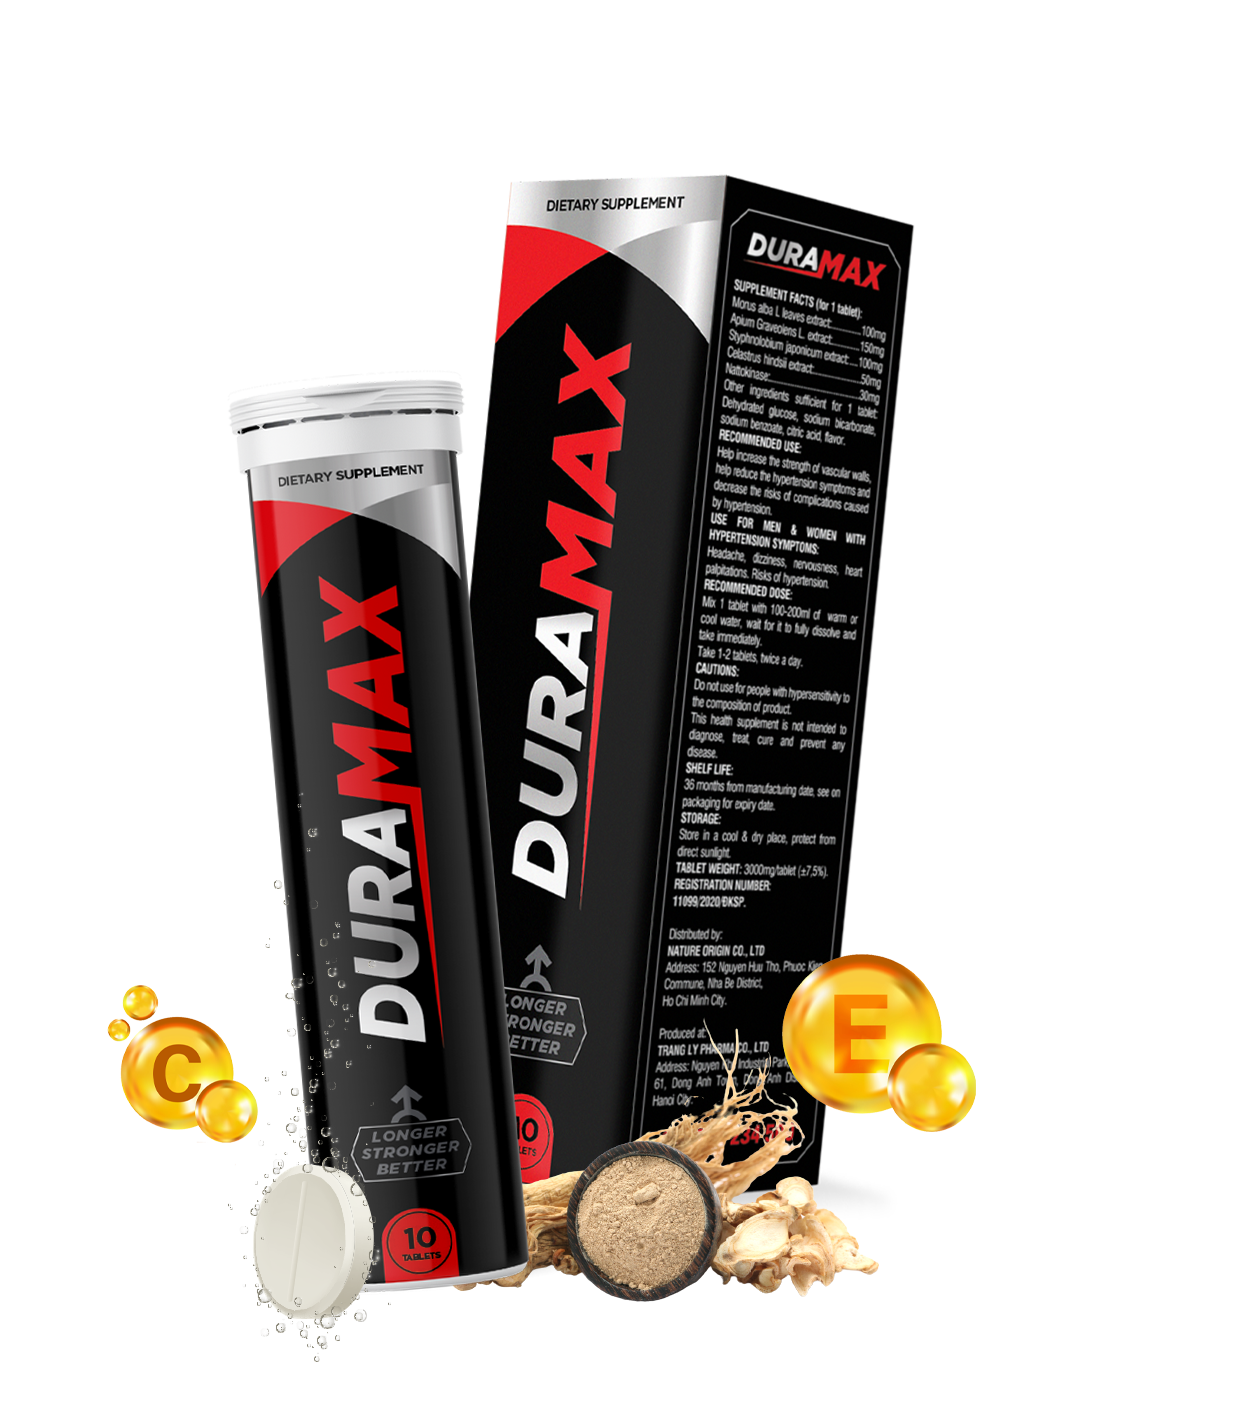 Duramax - ซื้อที่ไหน - ขาย - lazada - Thailand - เว็บไซต์ของผู้ผลิต